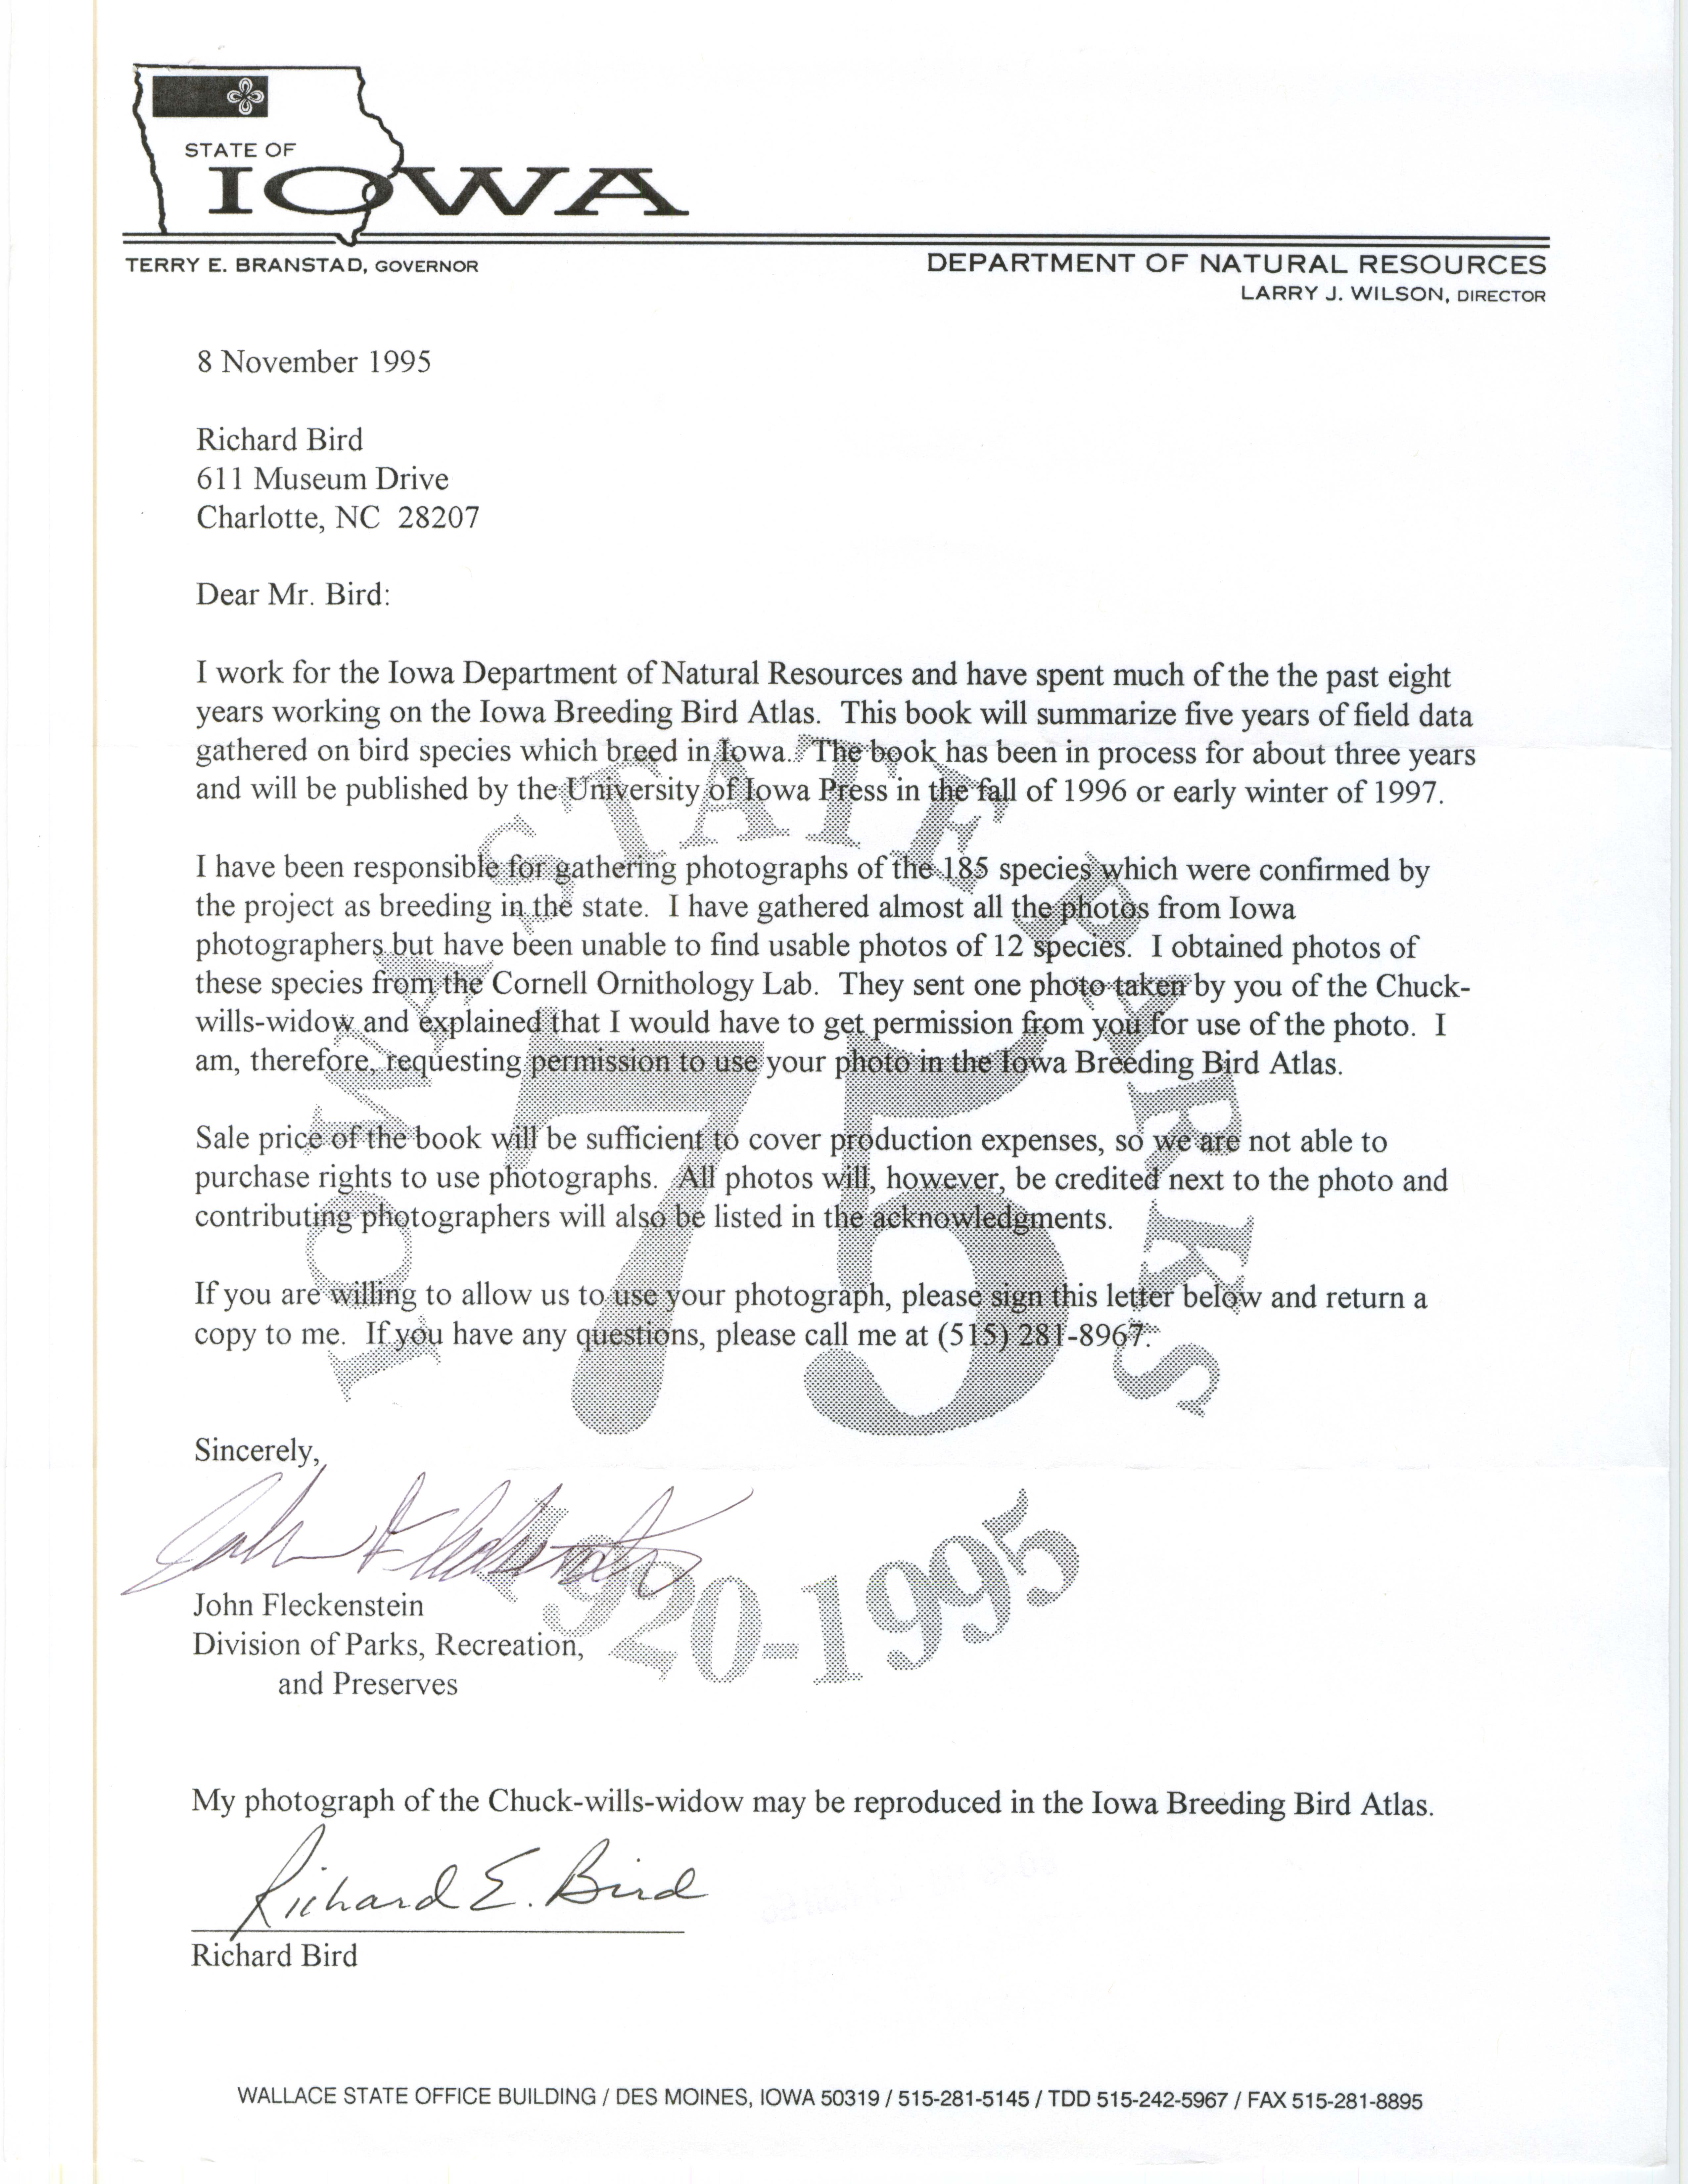 John Fleckenstein letter to Richard E. Bird regarding photographs for the Breeding Bird Atlas, November 8, 1995